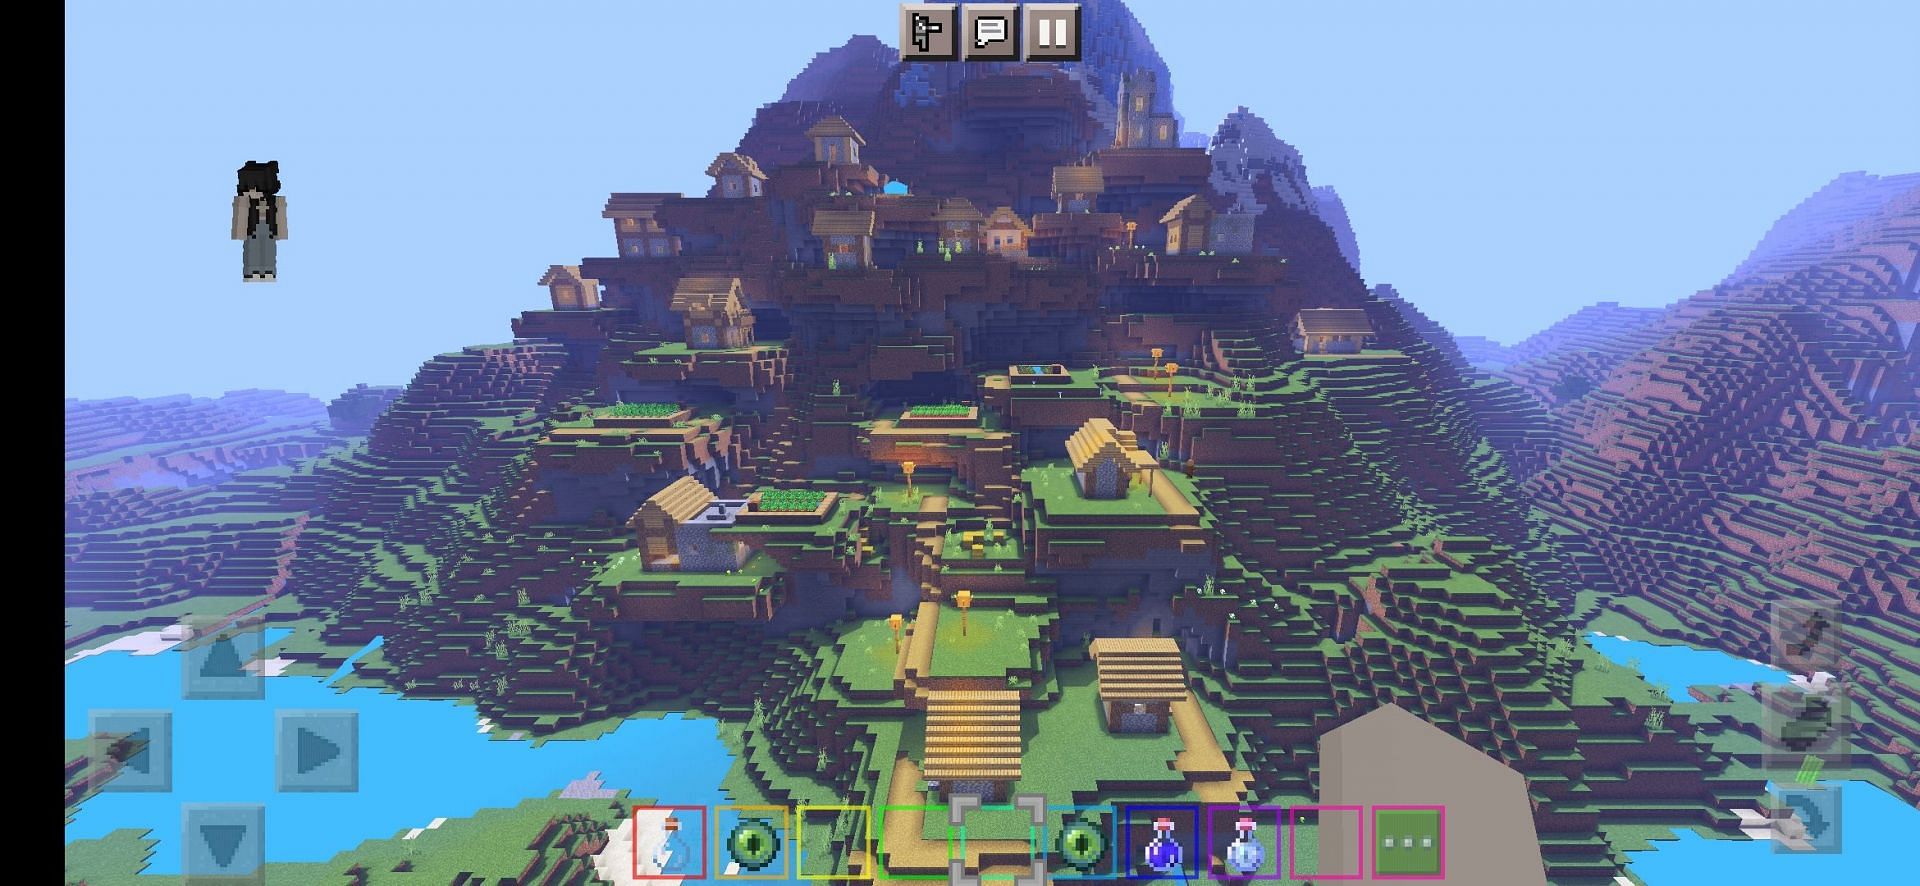 Village on a hill (Image via u/wierd_ic on Reddit)